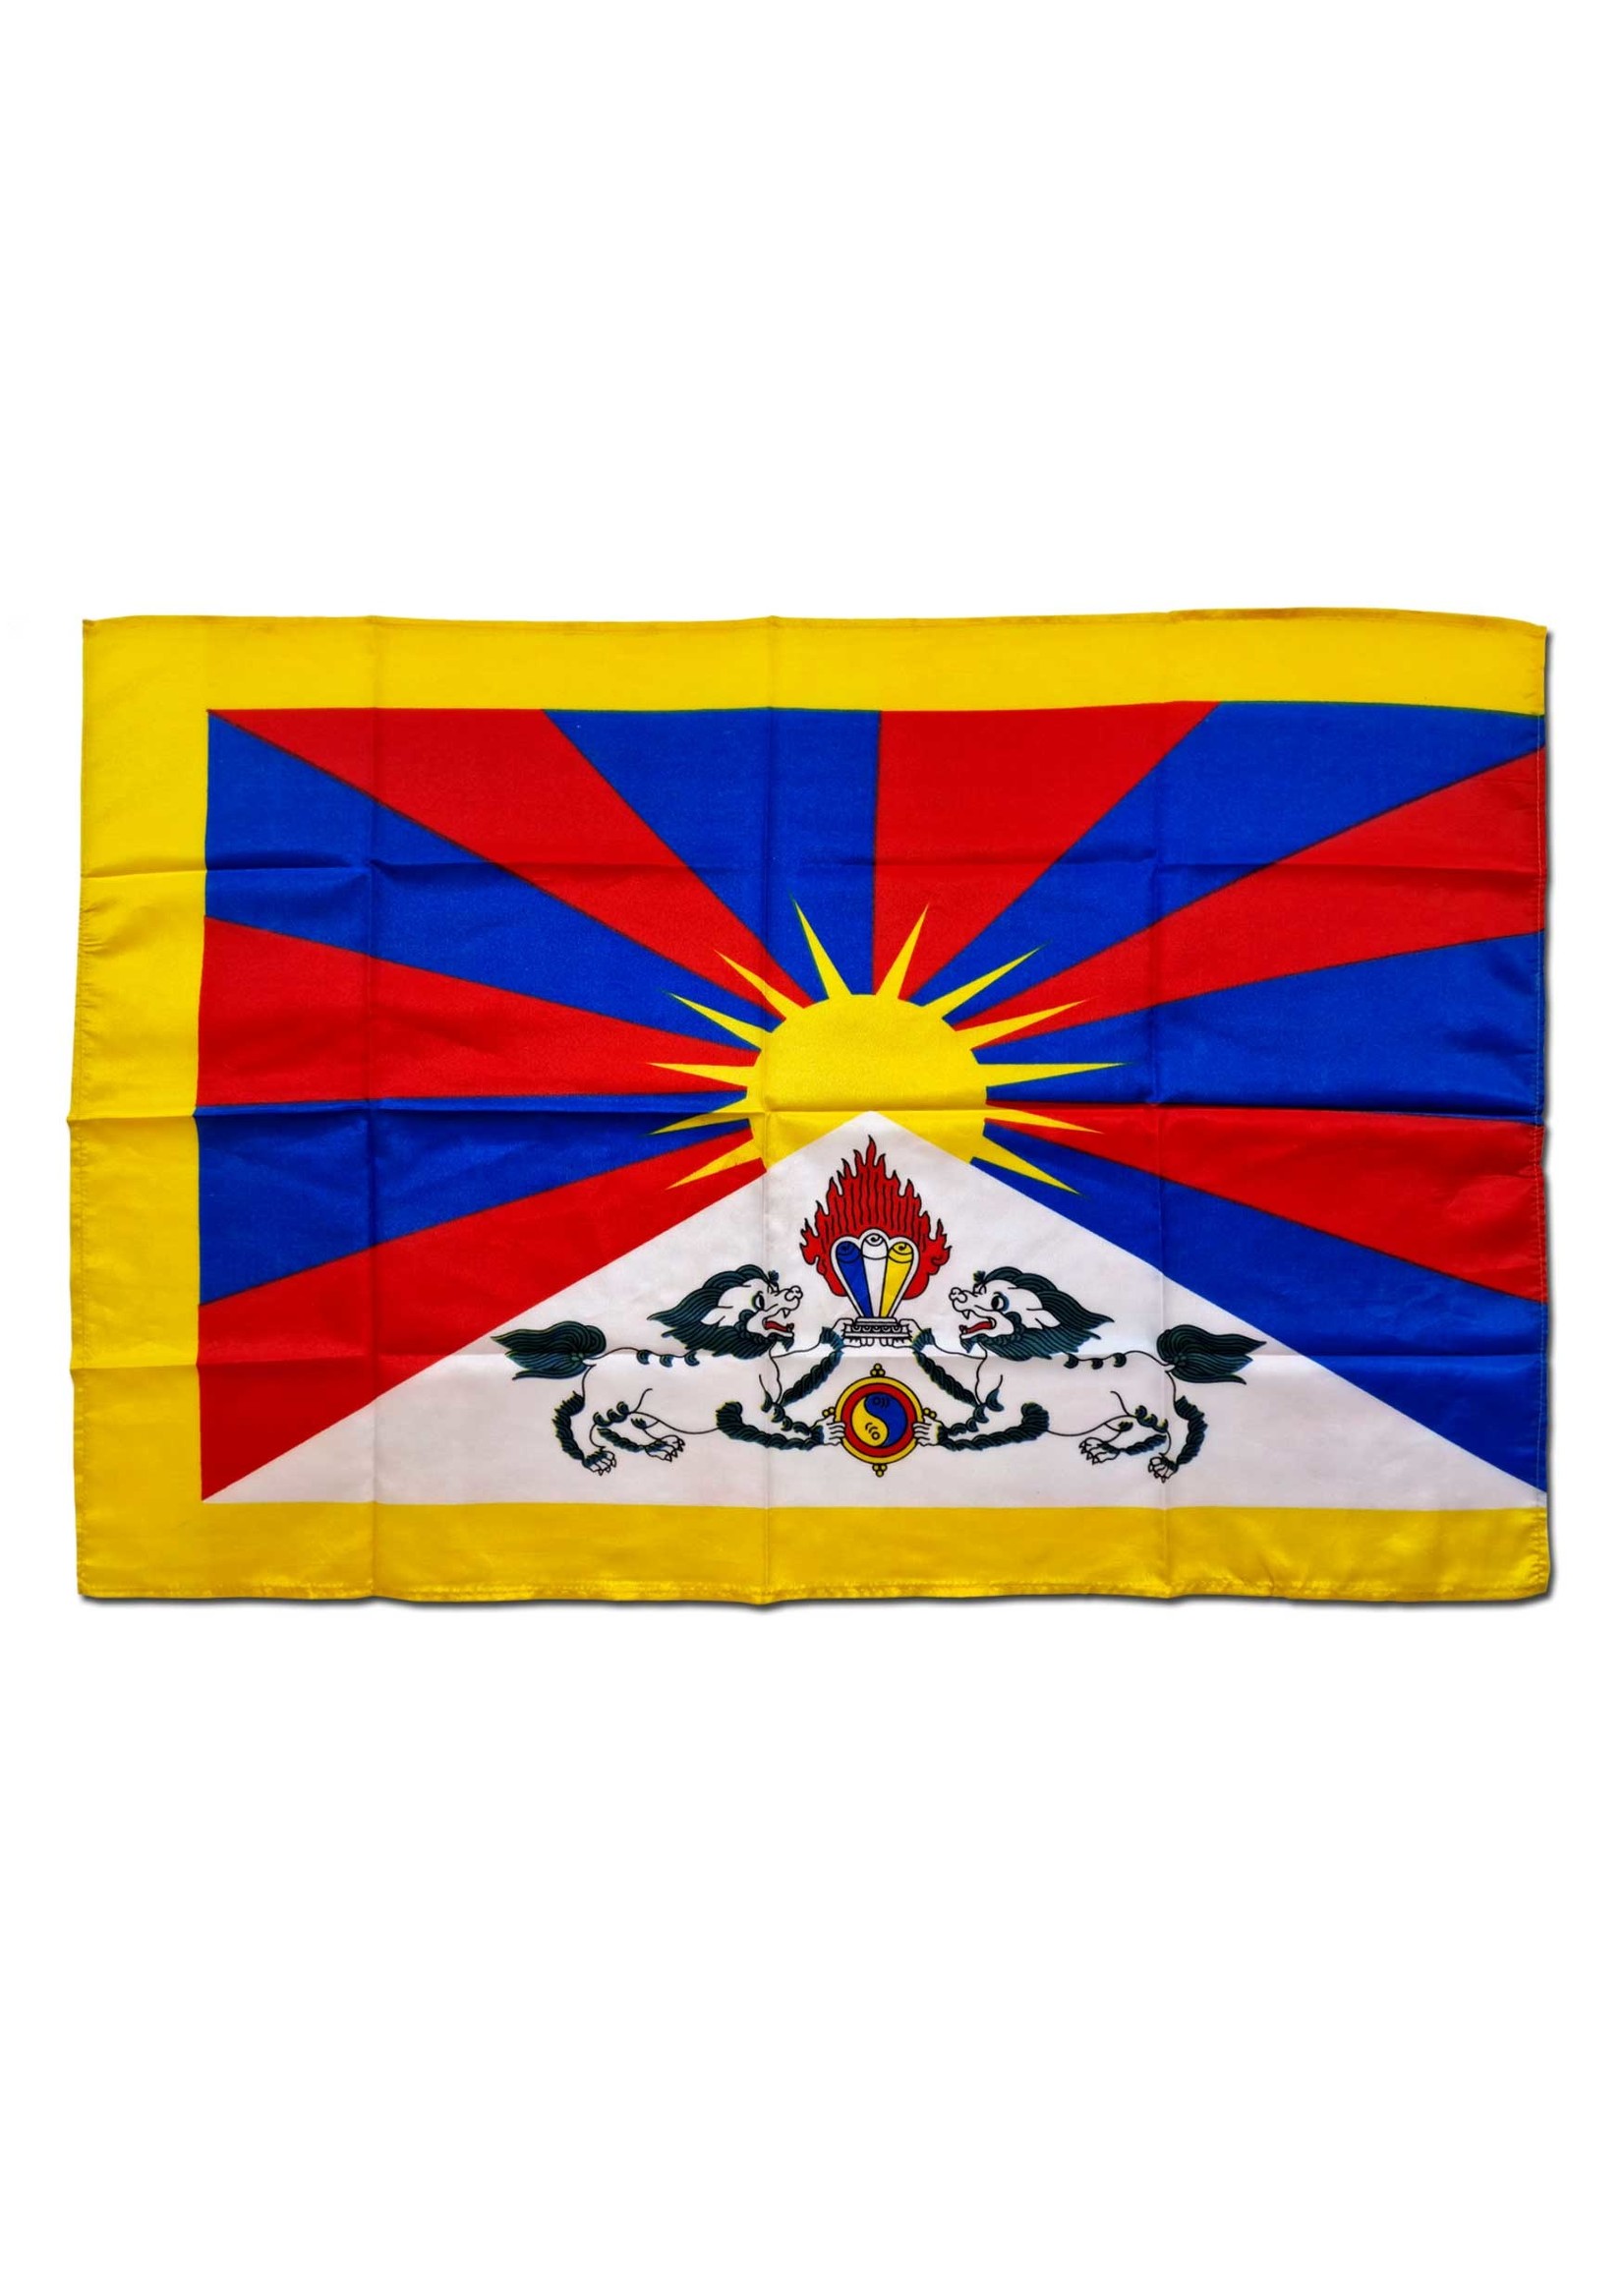 Bandiera nazionale tibetana